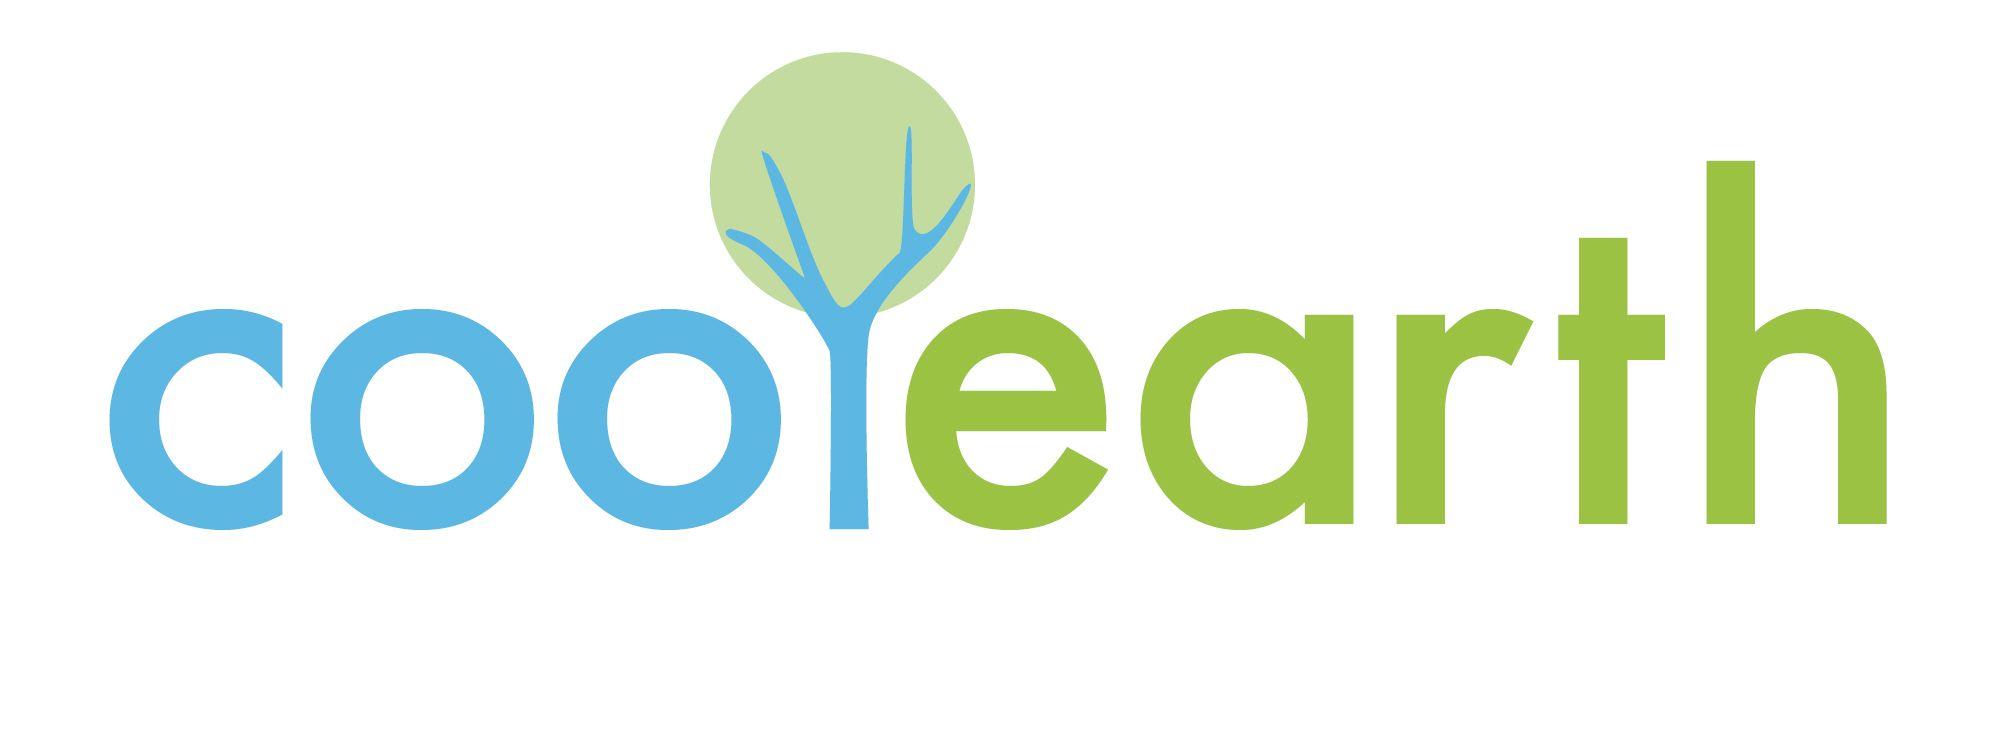 Google Earth Logo - Cool Earth Logo Sustainable Design